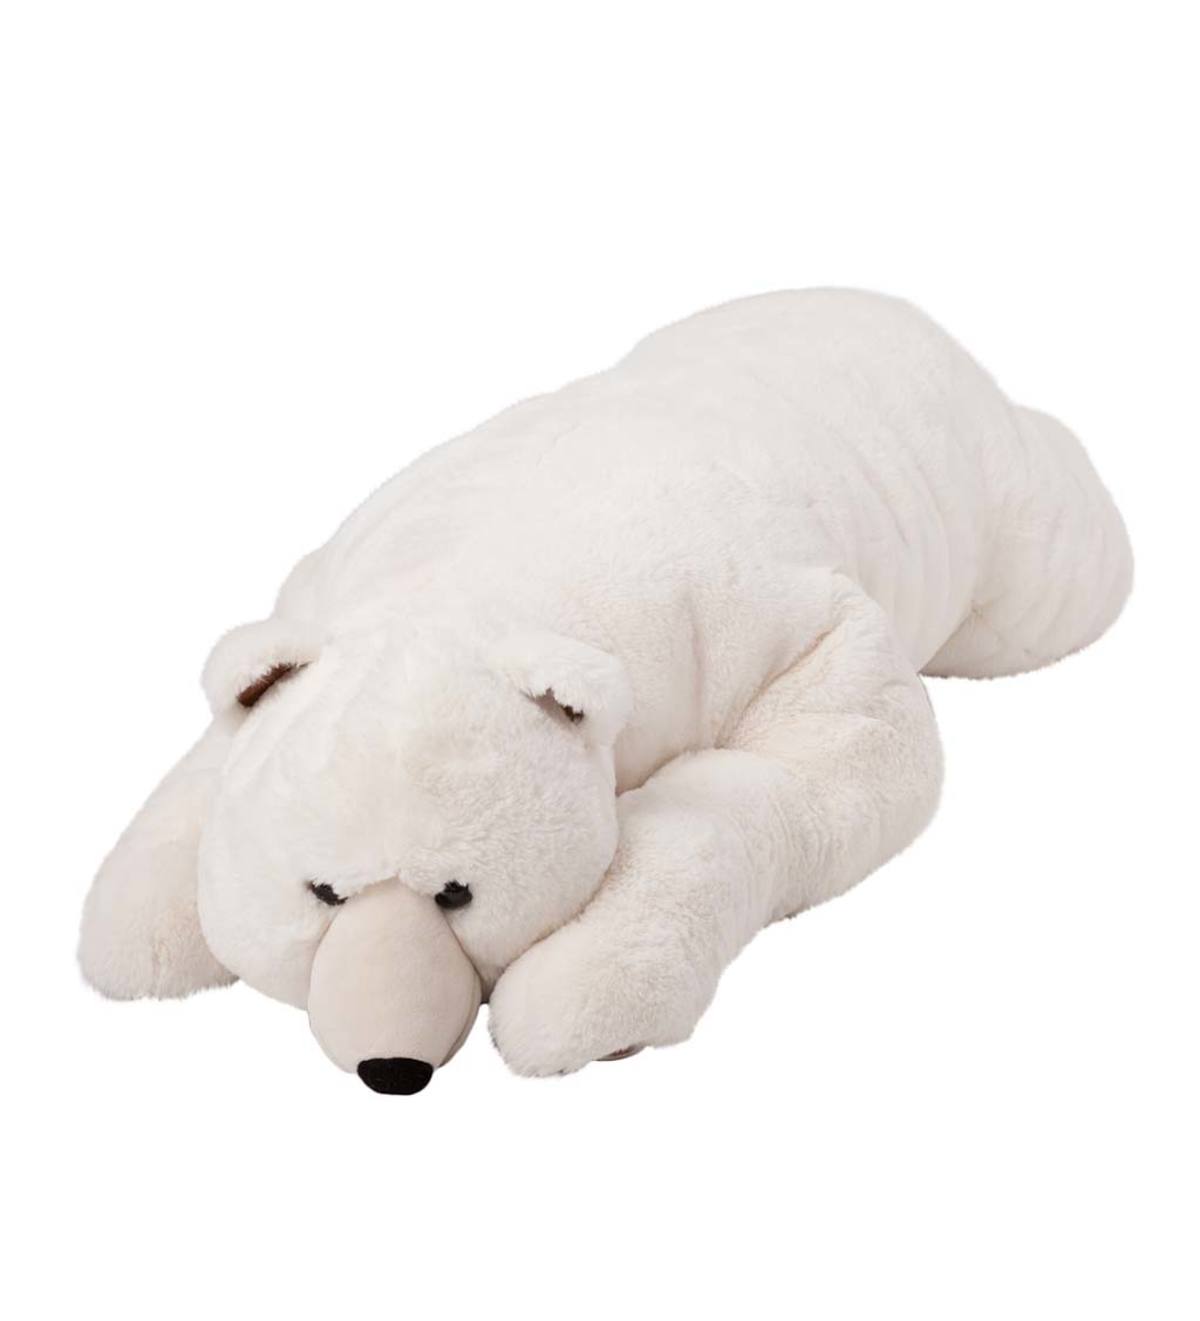 Polar Bear Hug Body Pillows - Free 2 Day Amazon Delivery